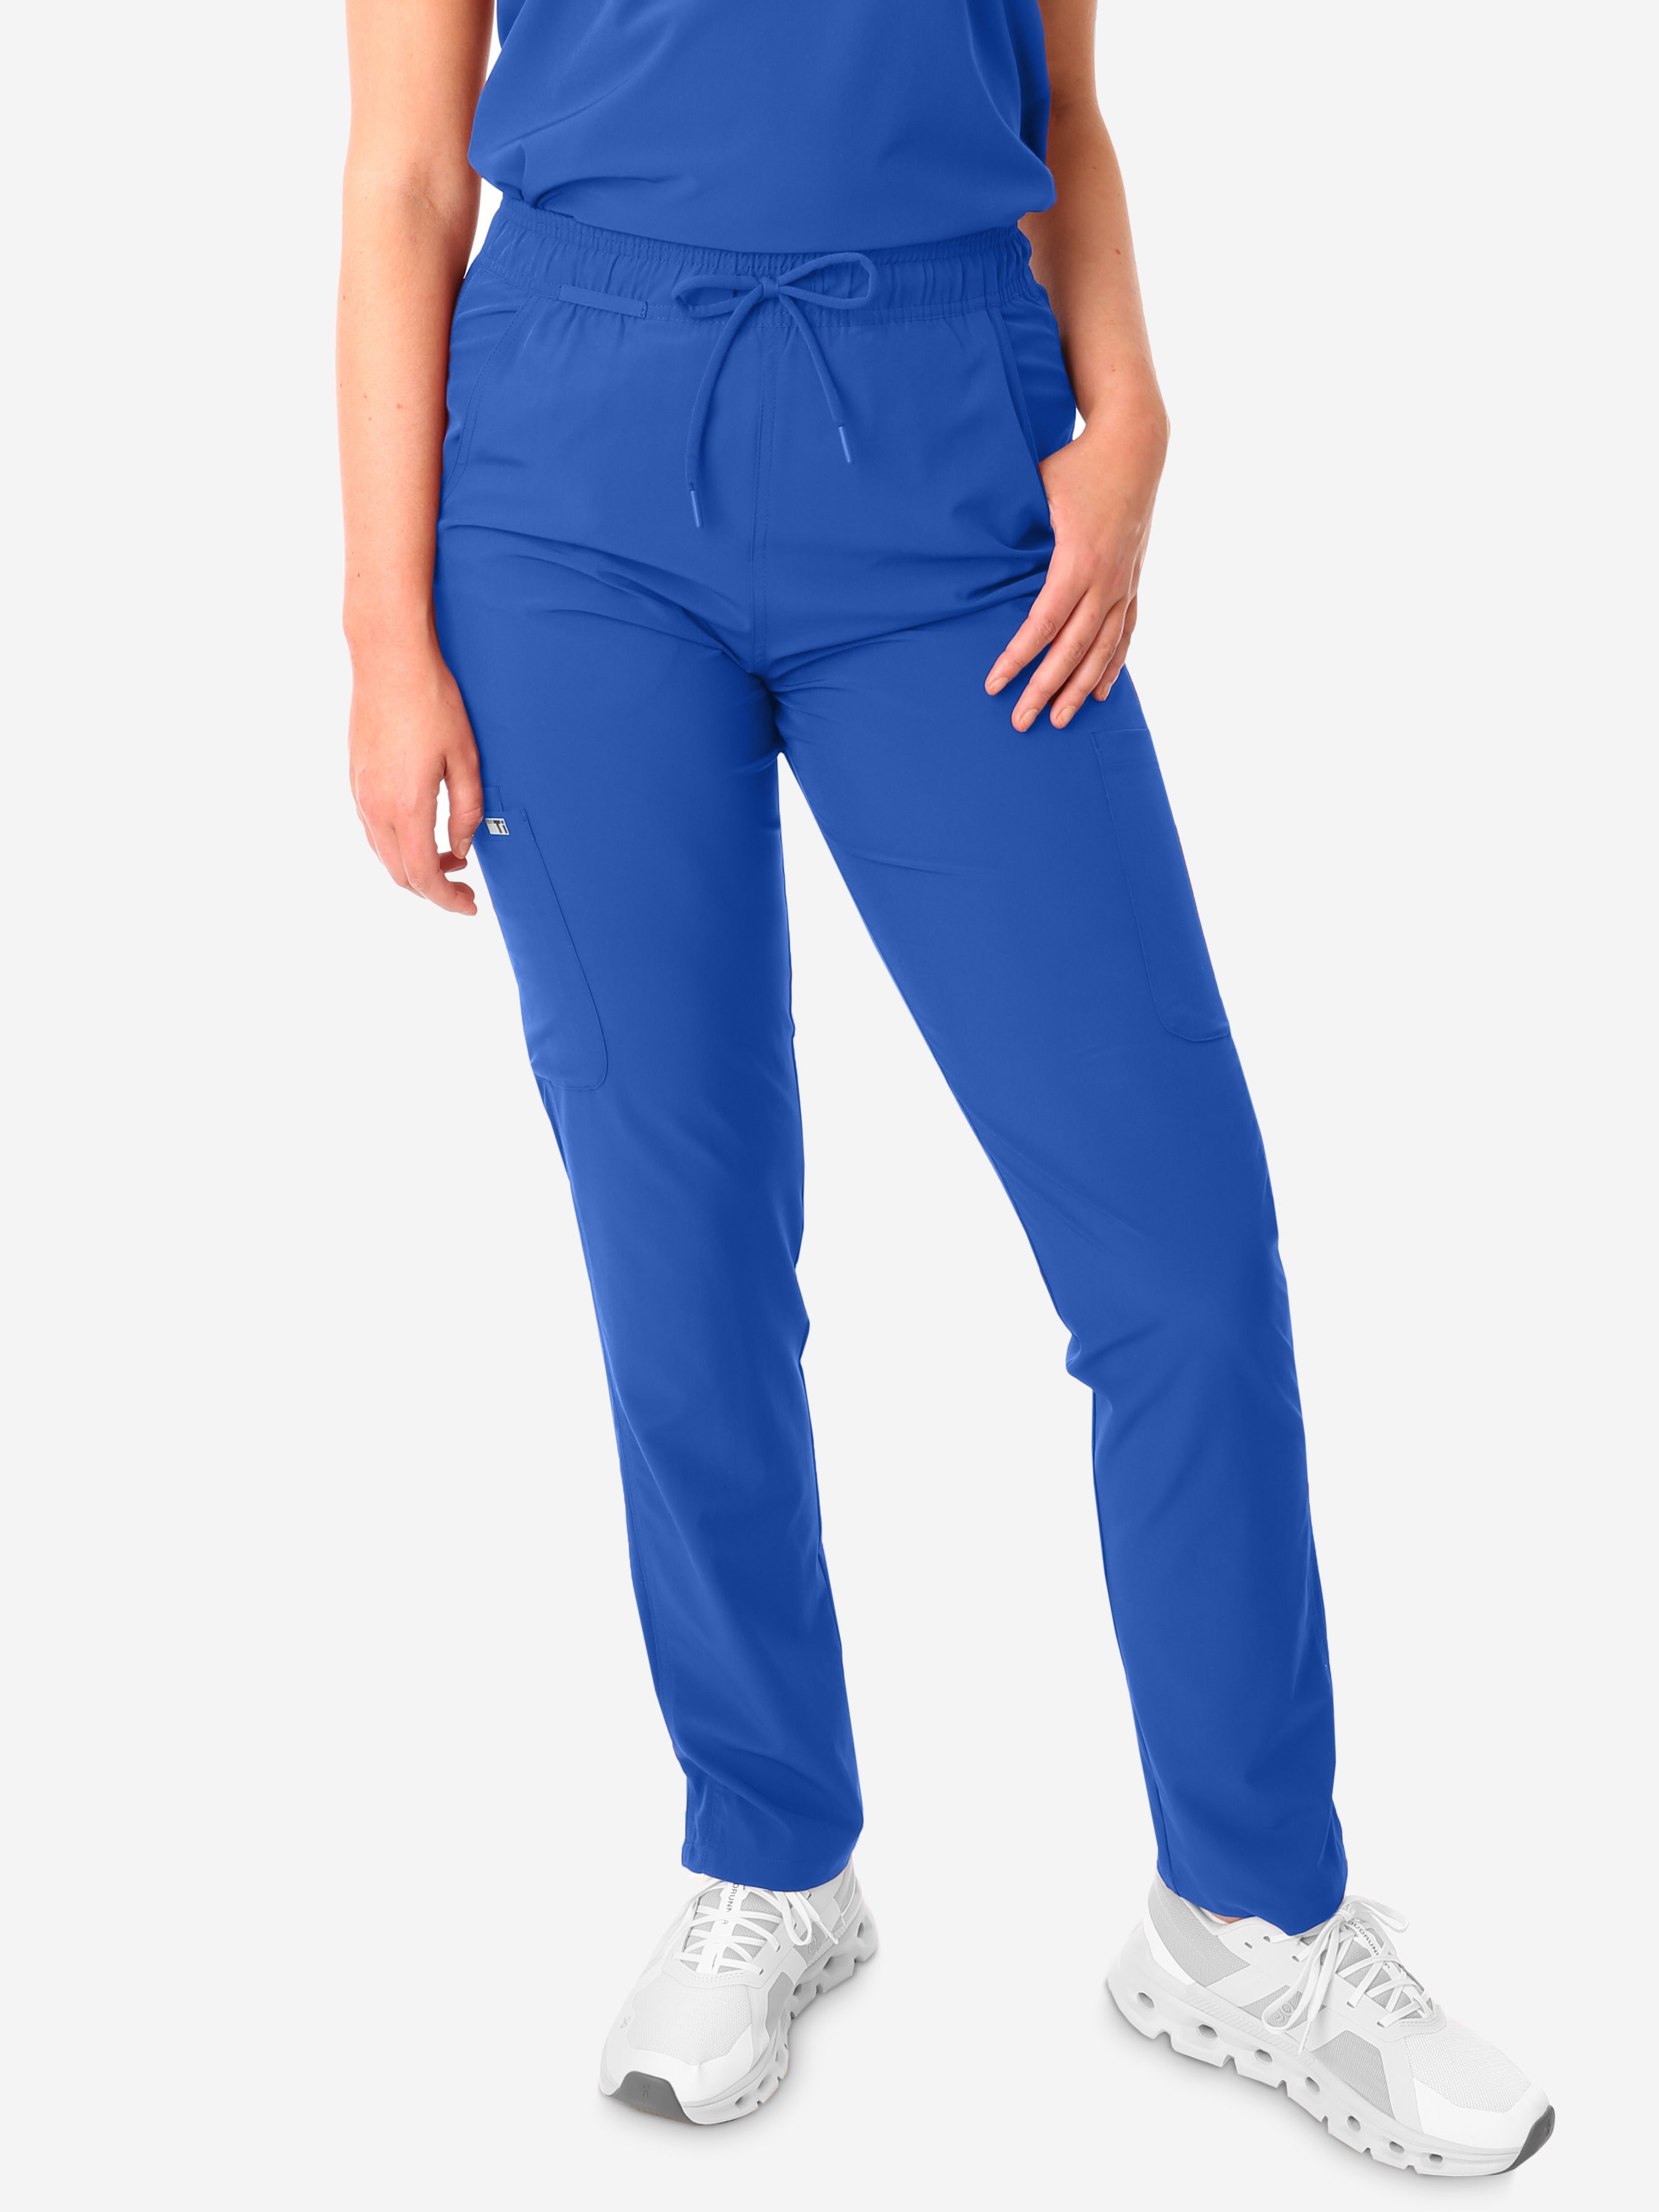 TiScrubs Royal Blue Women's Stretch 9-Pocket Pants Front View Pants Only